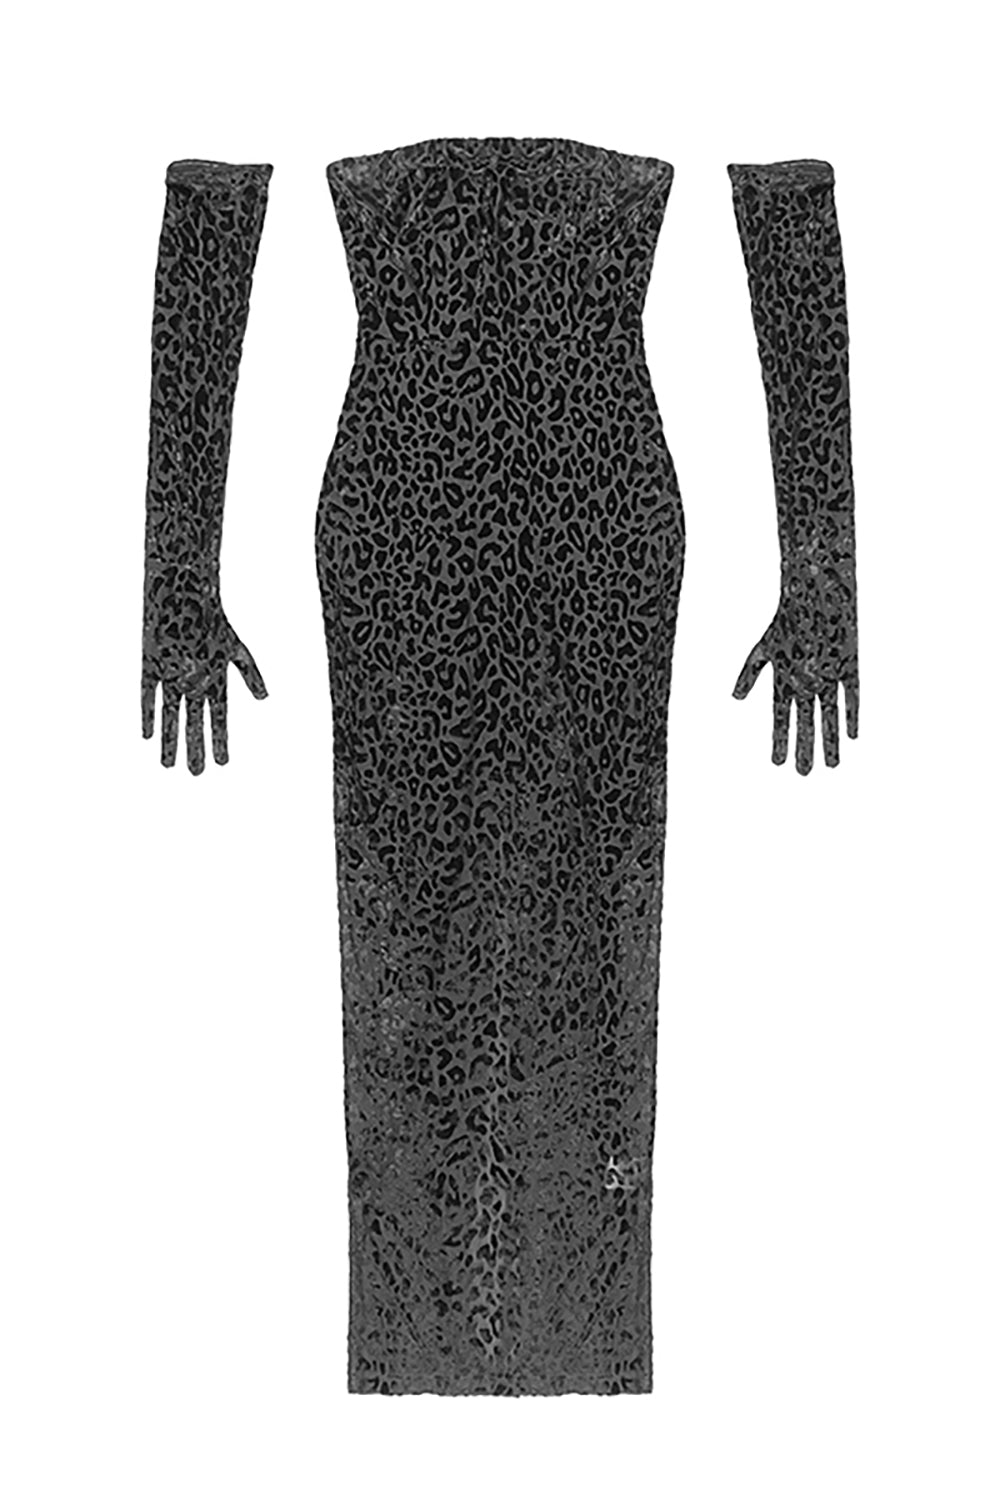 Black Leopard Off-The-Shoulder Figure Hugging Gown And Evening Gloves - Chicida